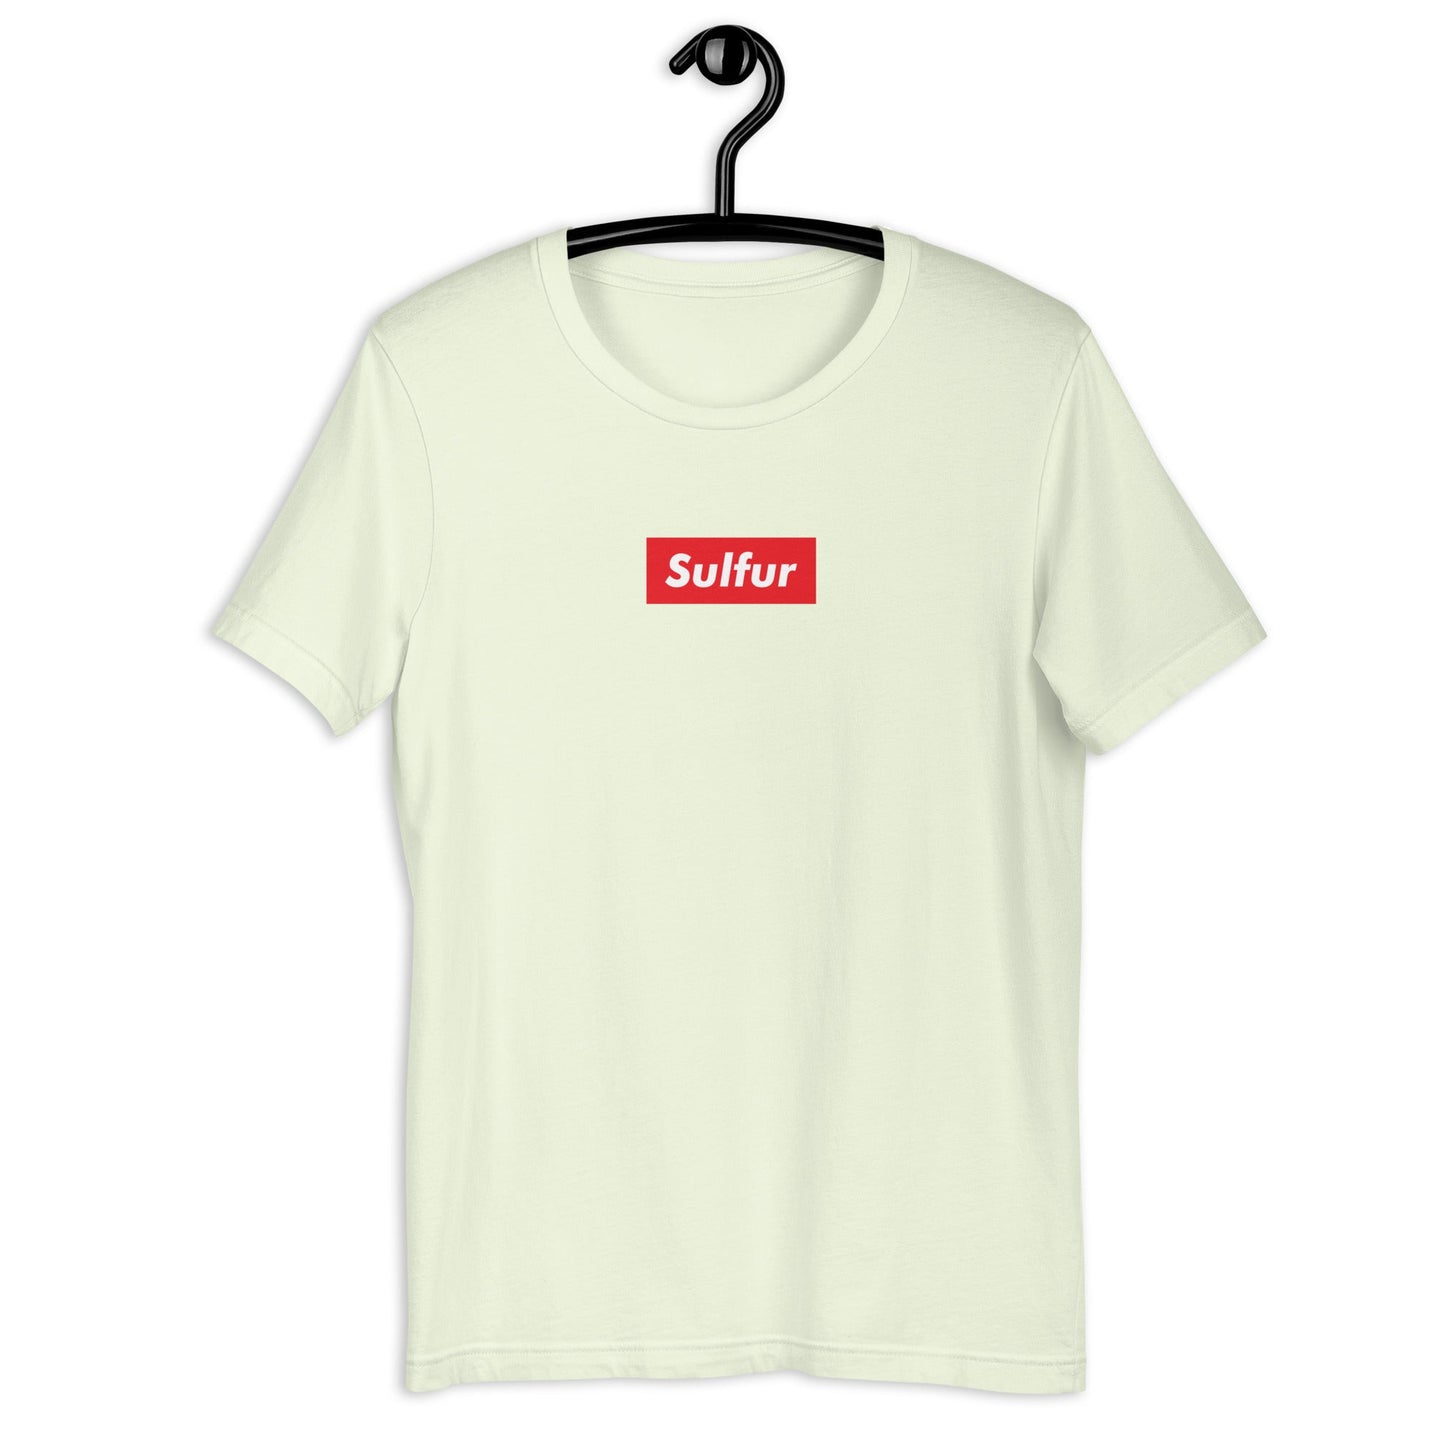 DECANTsf SULFUR - Unisex t-shirt - DECANTsf